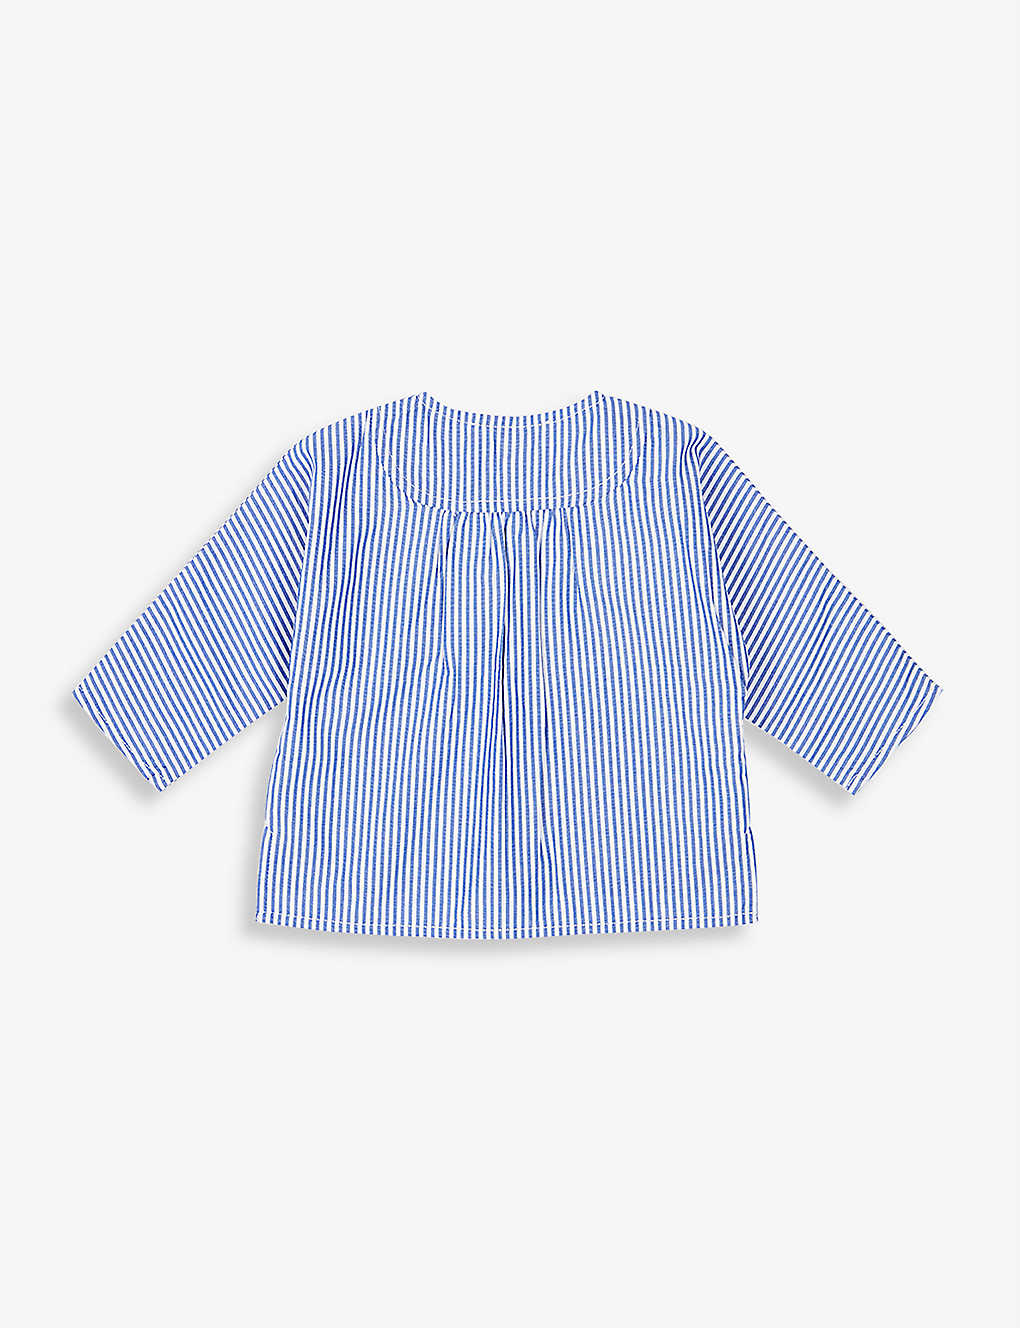 Caramel Babies' Dragonet Buttoned Cotton Shirt 3-24 Months In Blue/white Stripe